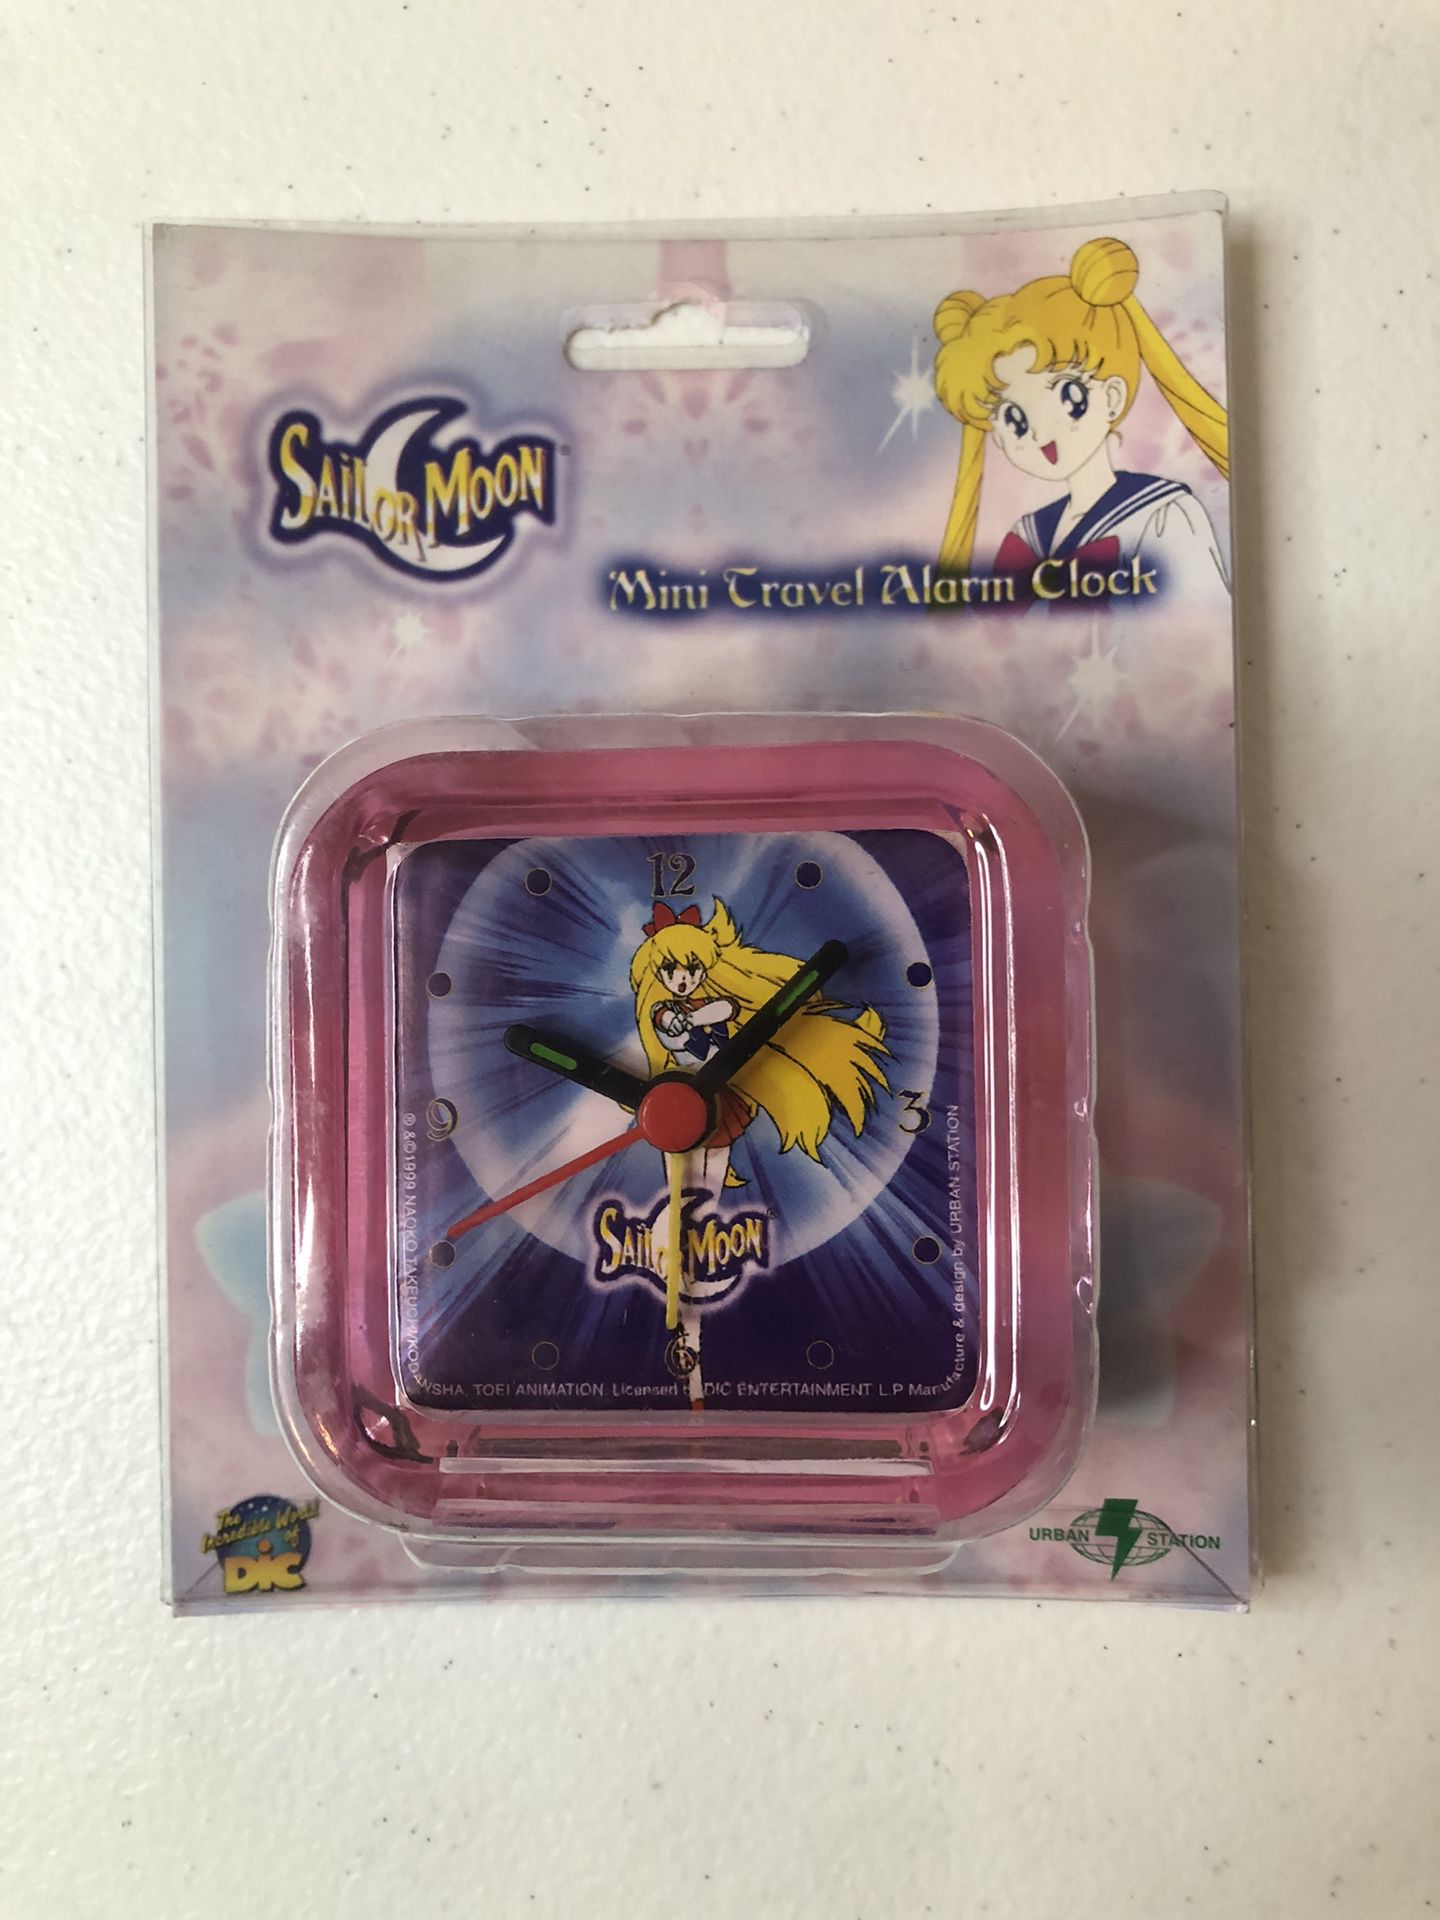 1999 Sailor Moon Mini Travel Alarm Clock